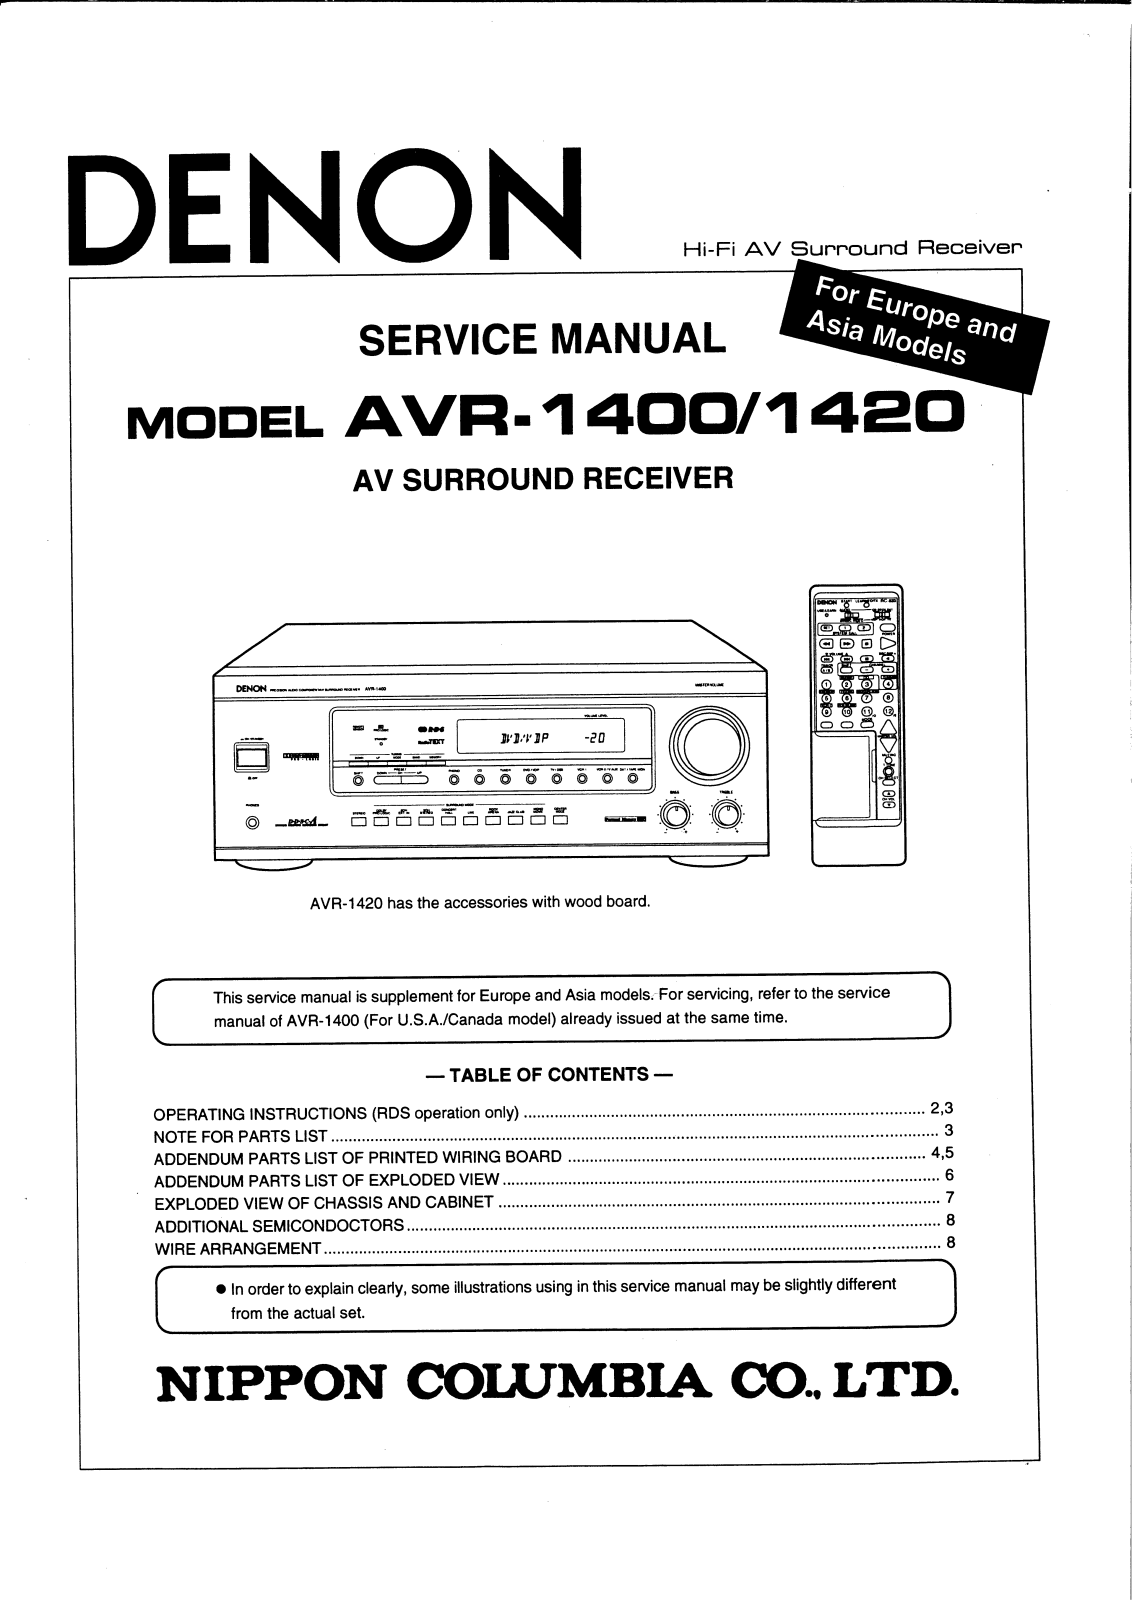 Denon AVR-1400 Service Manual